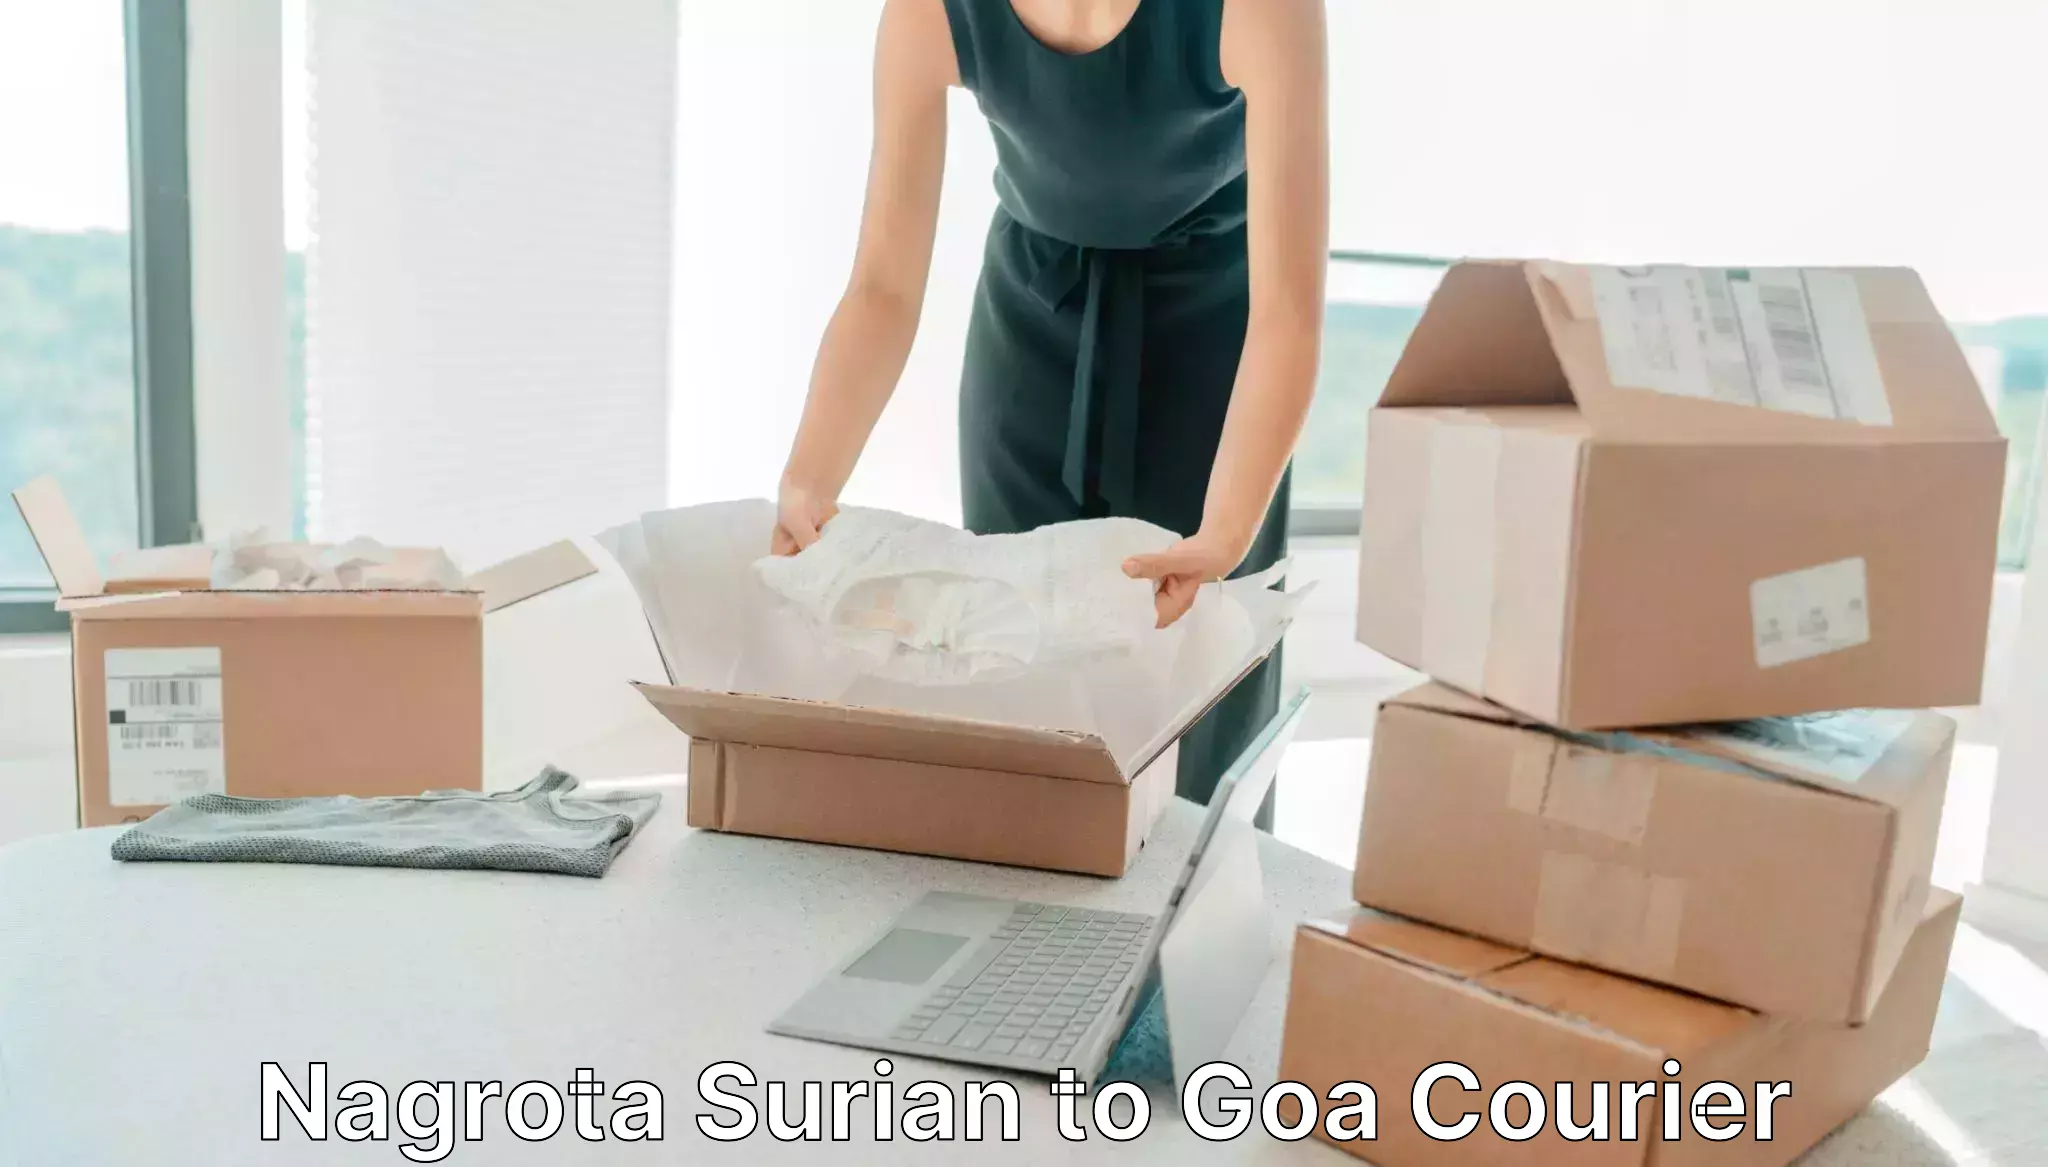 Courier service comparison Nagrota Surian to Goa